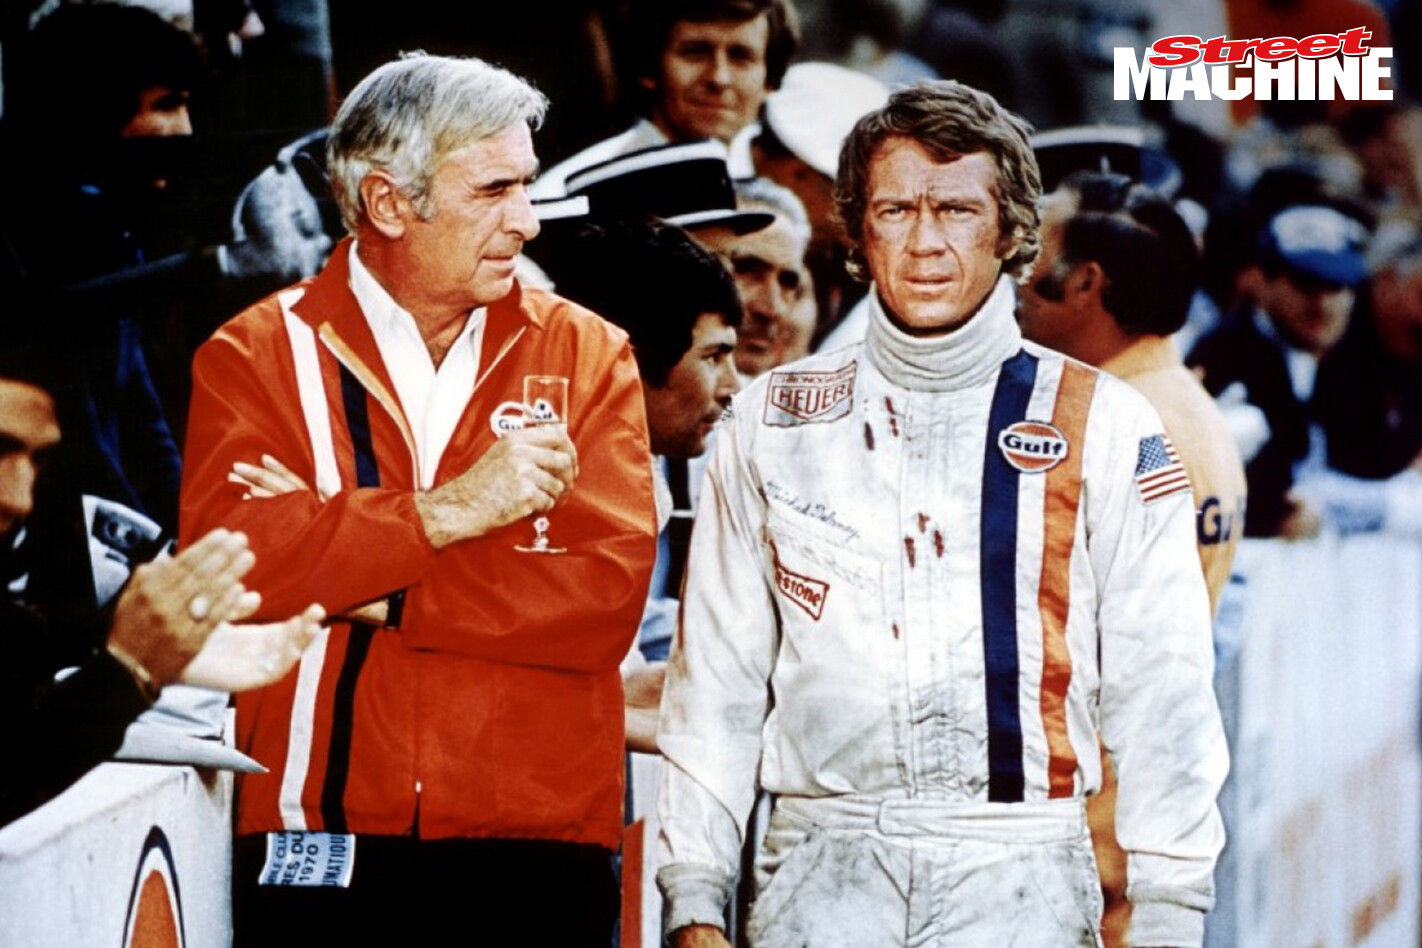 Le Mans 1971 Steve Mcqueen 3 Nw